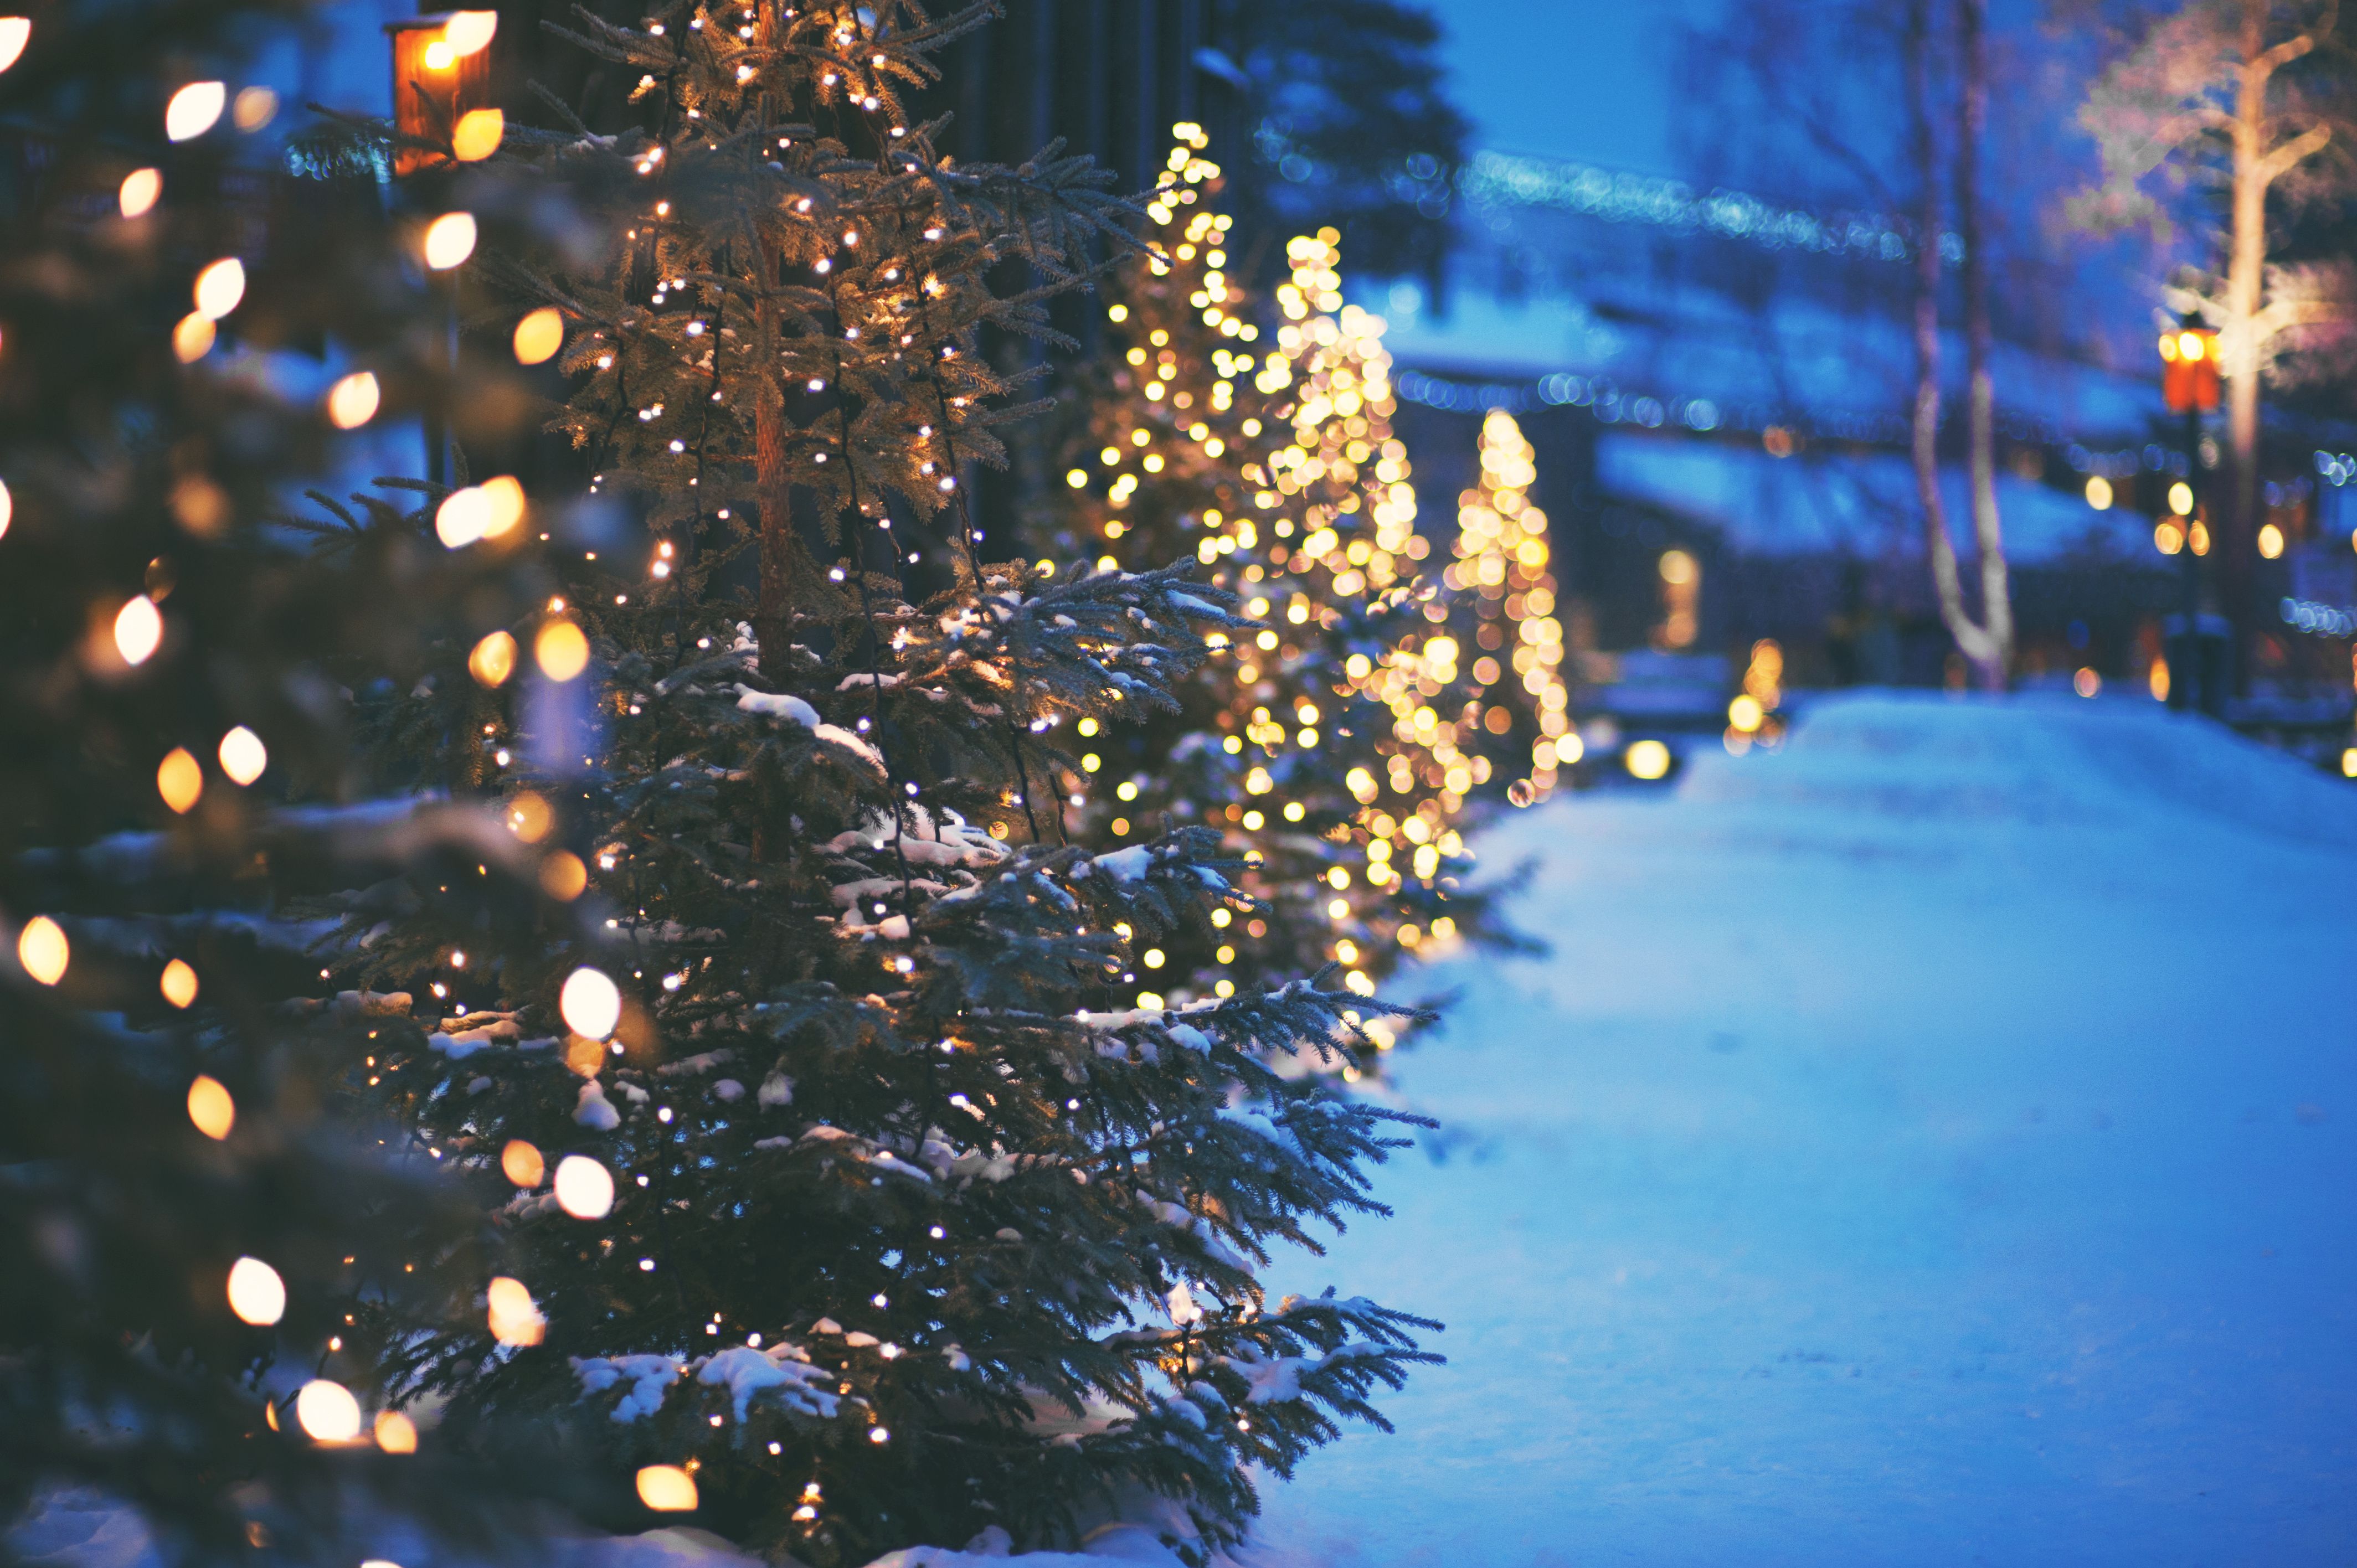 A row of Christmas trees with white lights. - Christmas lights